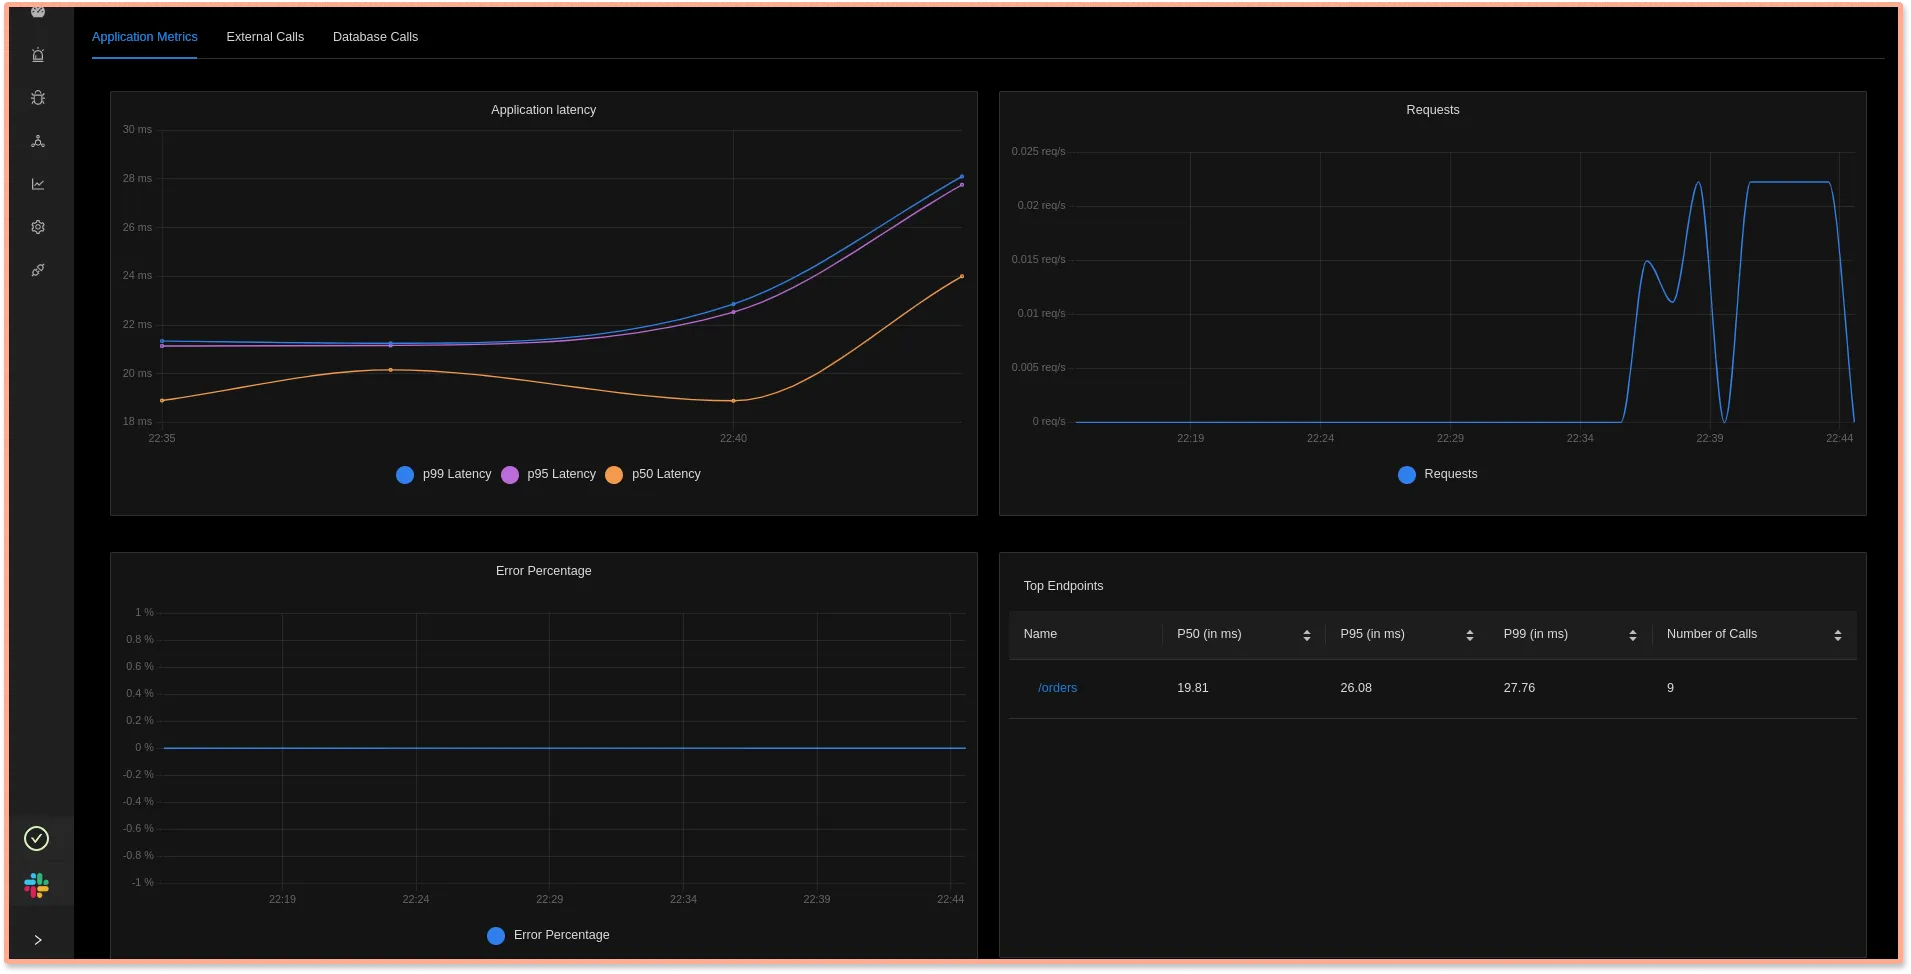 SigNoz dashboard showing application metrics